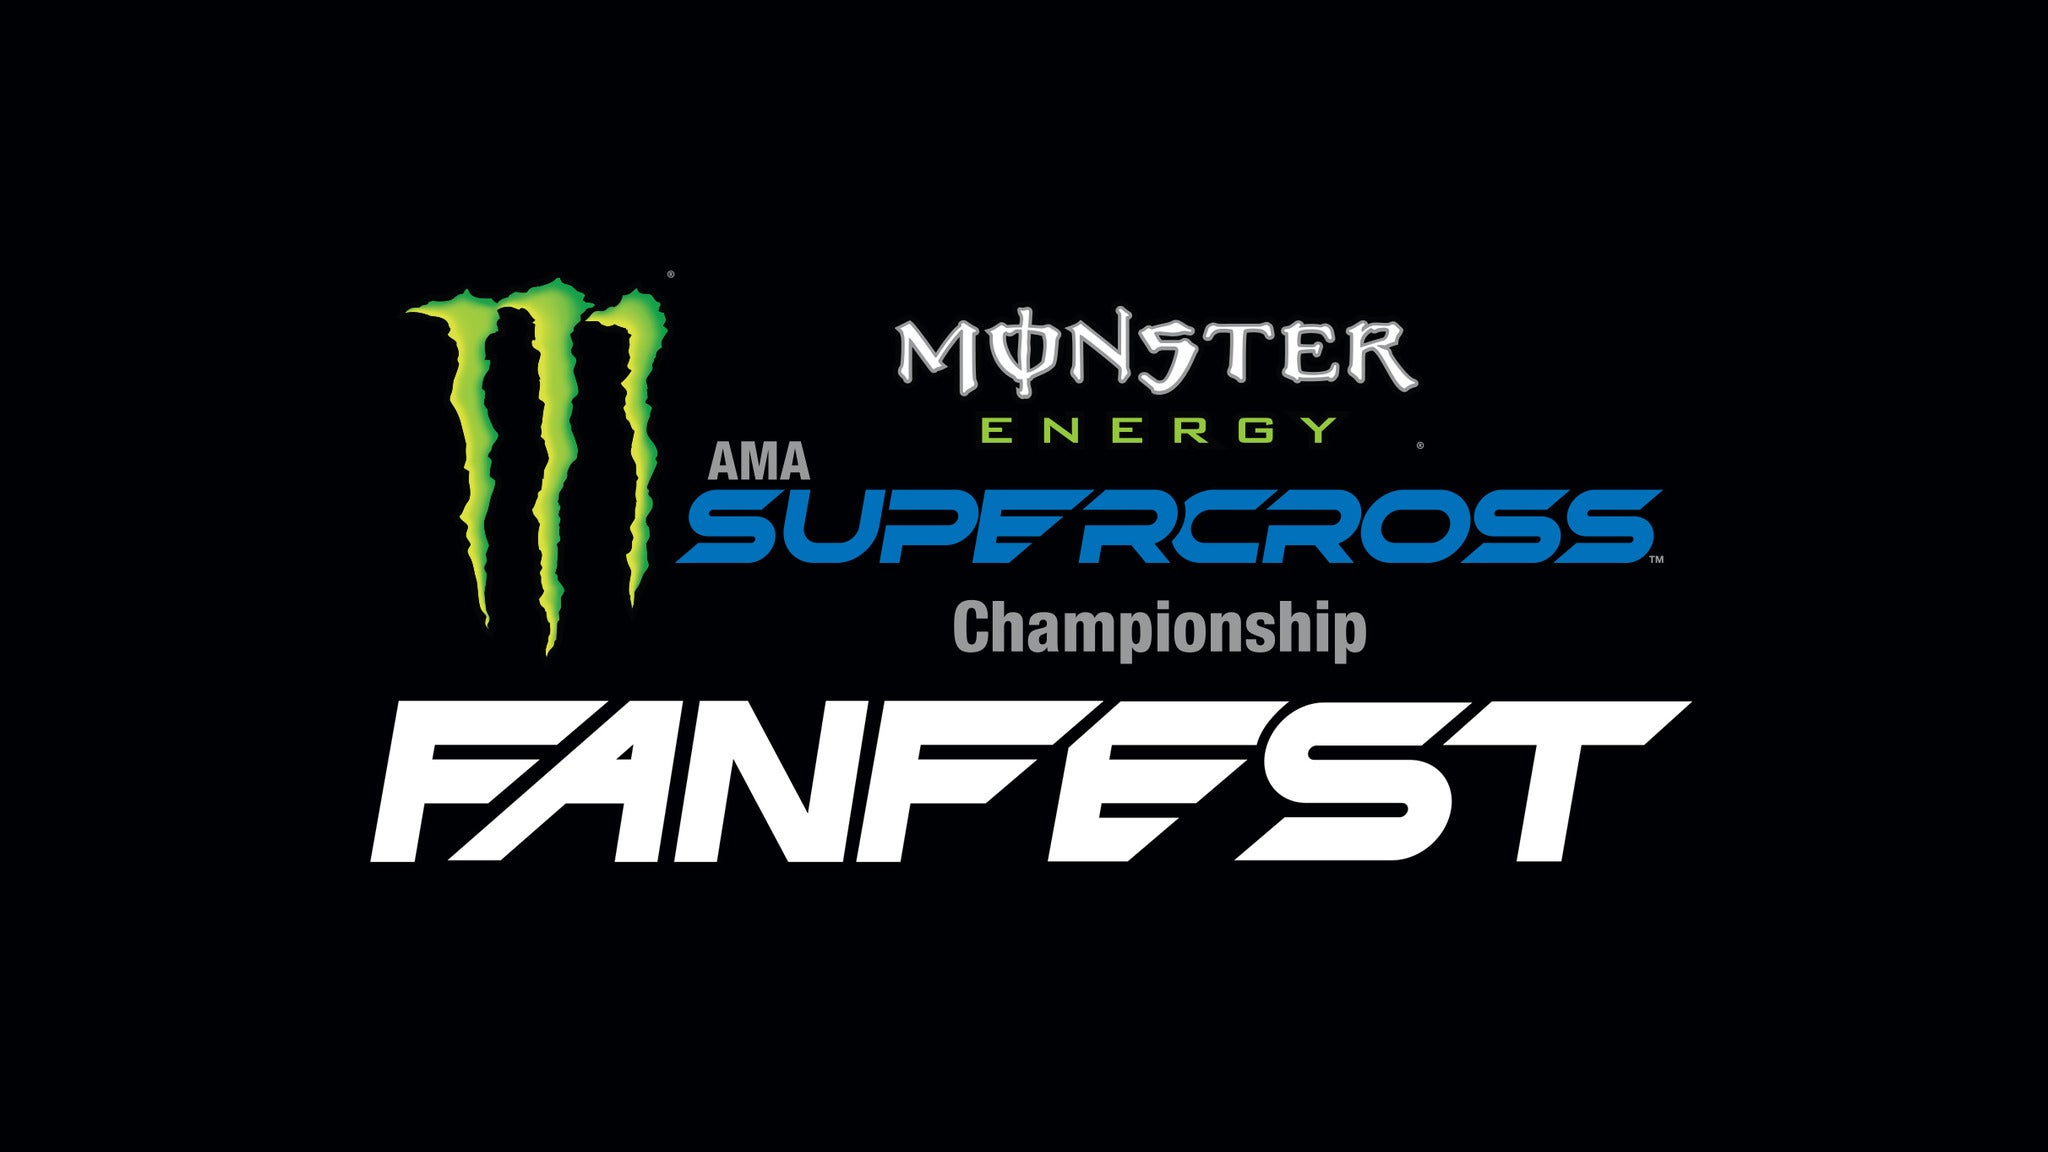 Monster Energy Supercross Fan Fest Pass:Preshow Fan Fest From 12PM-6PM in Anaheim promo photo for Preferred presale offer code